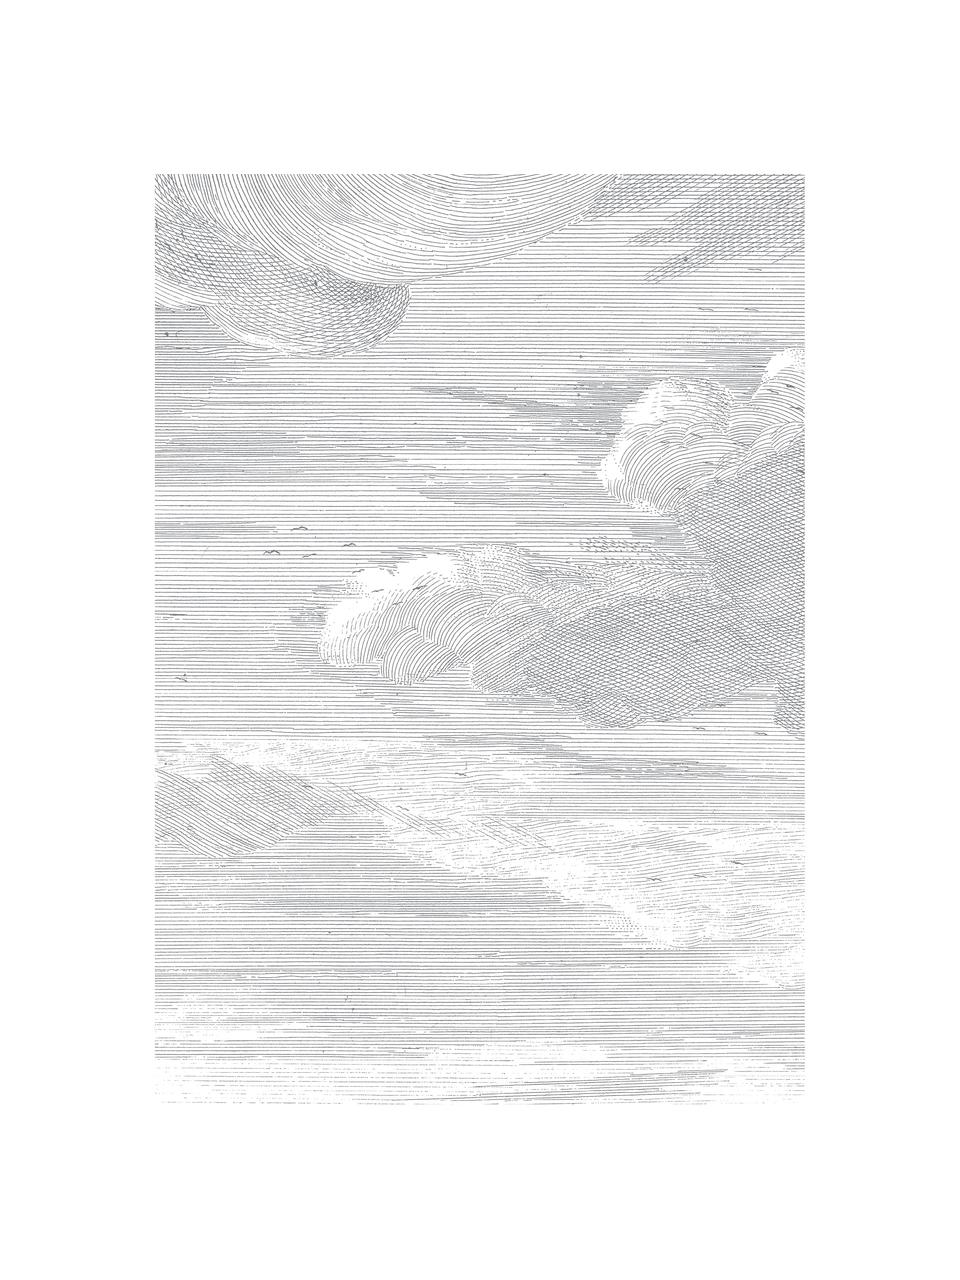 Adesivo murale grigio Clouds, Tessuto non tessuto, Grigio, bianco, Larg. 195 x Alt. 280 cm